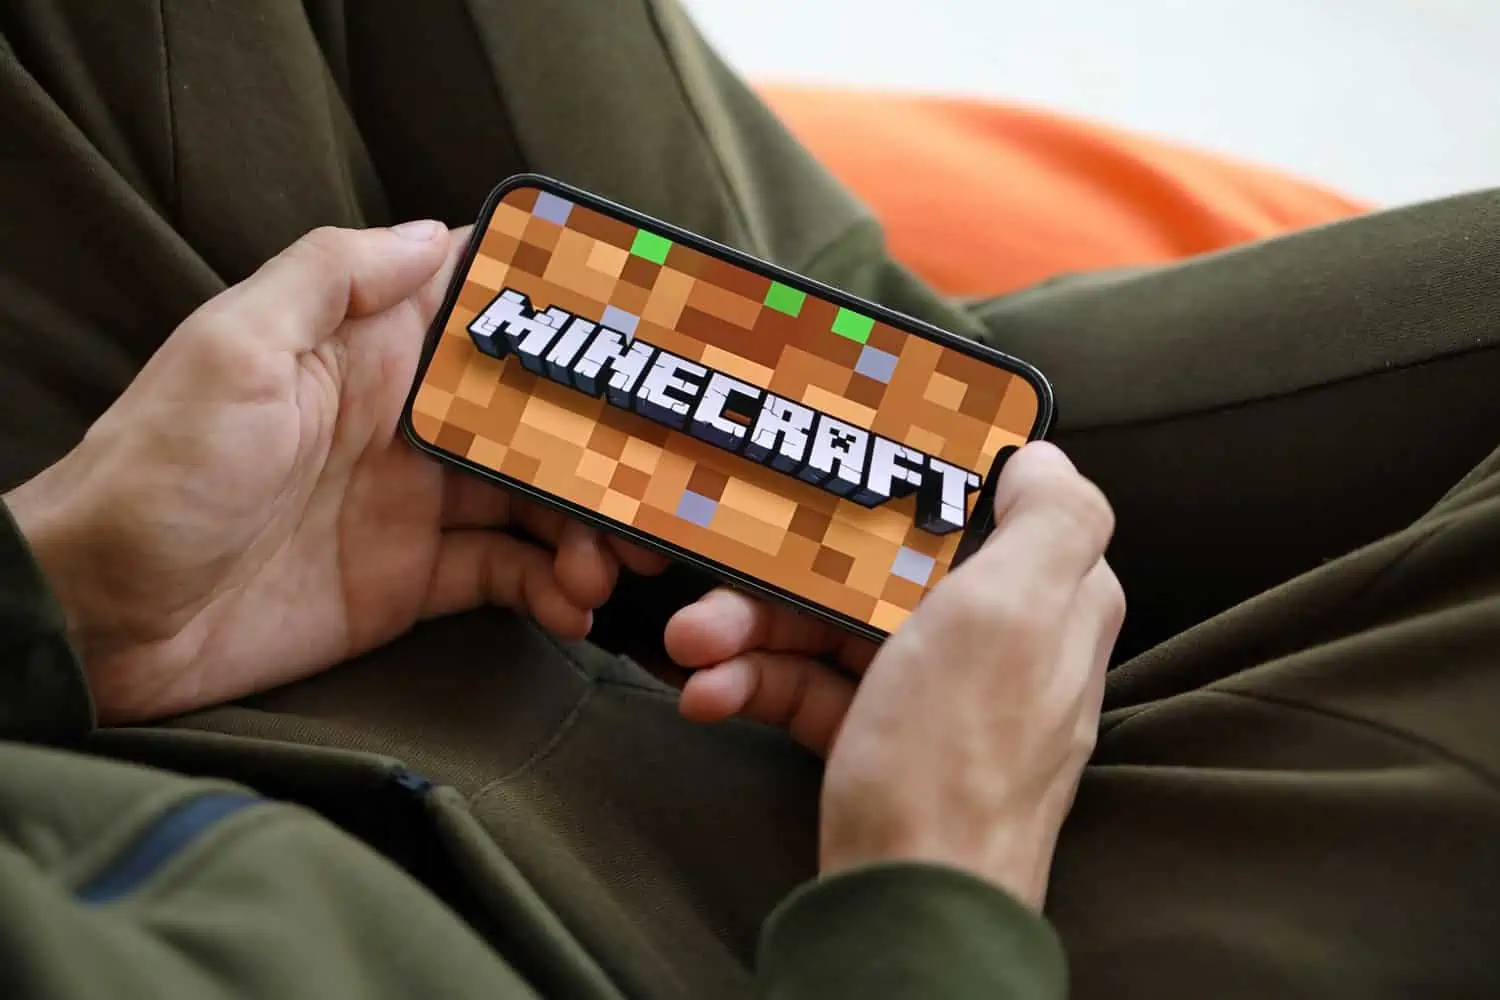 Man holdin smartphone with minecraft game